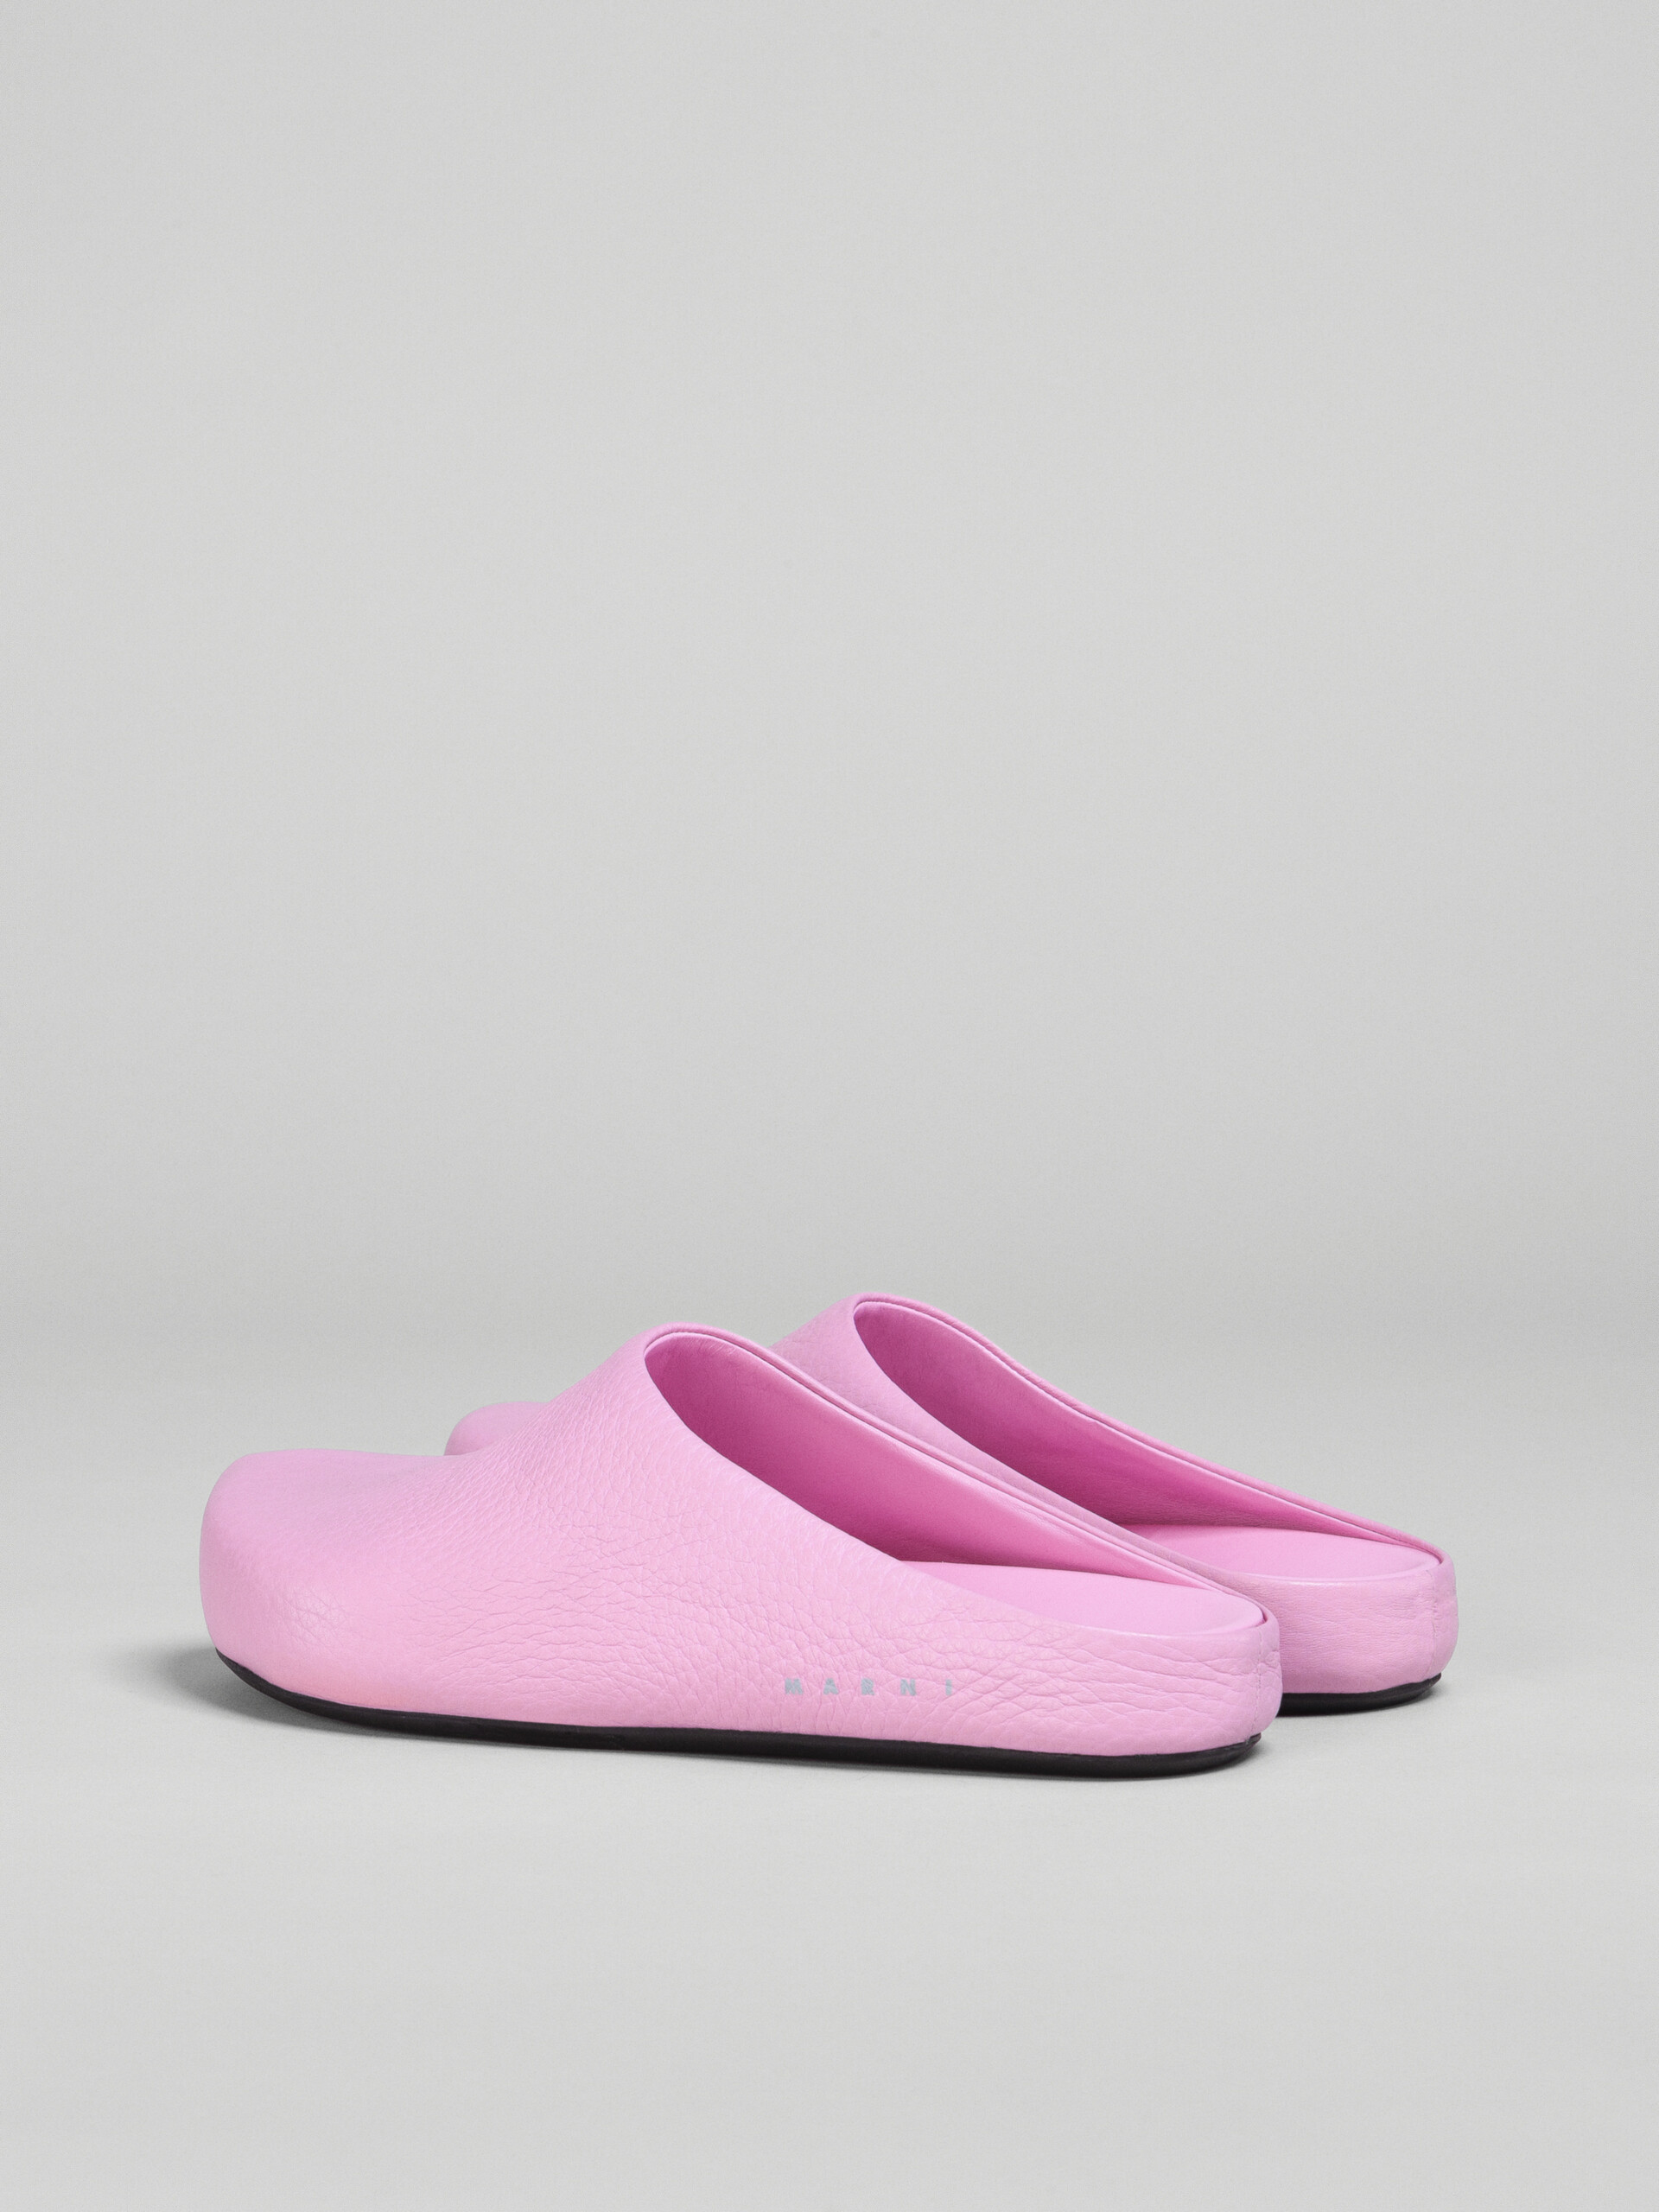 Pink leather Fussbett sabot - Clogs - Image 3